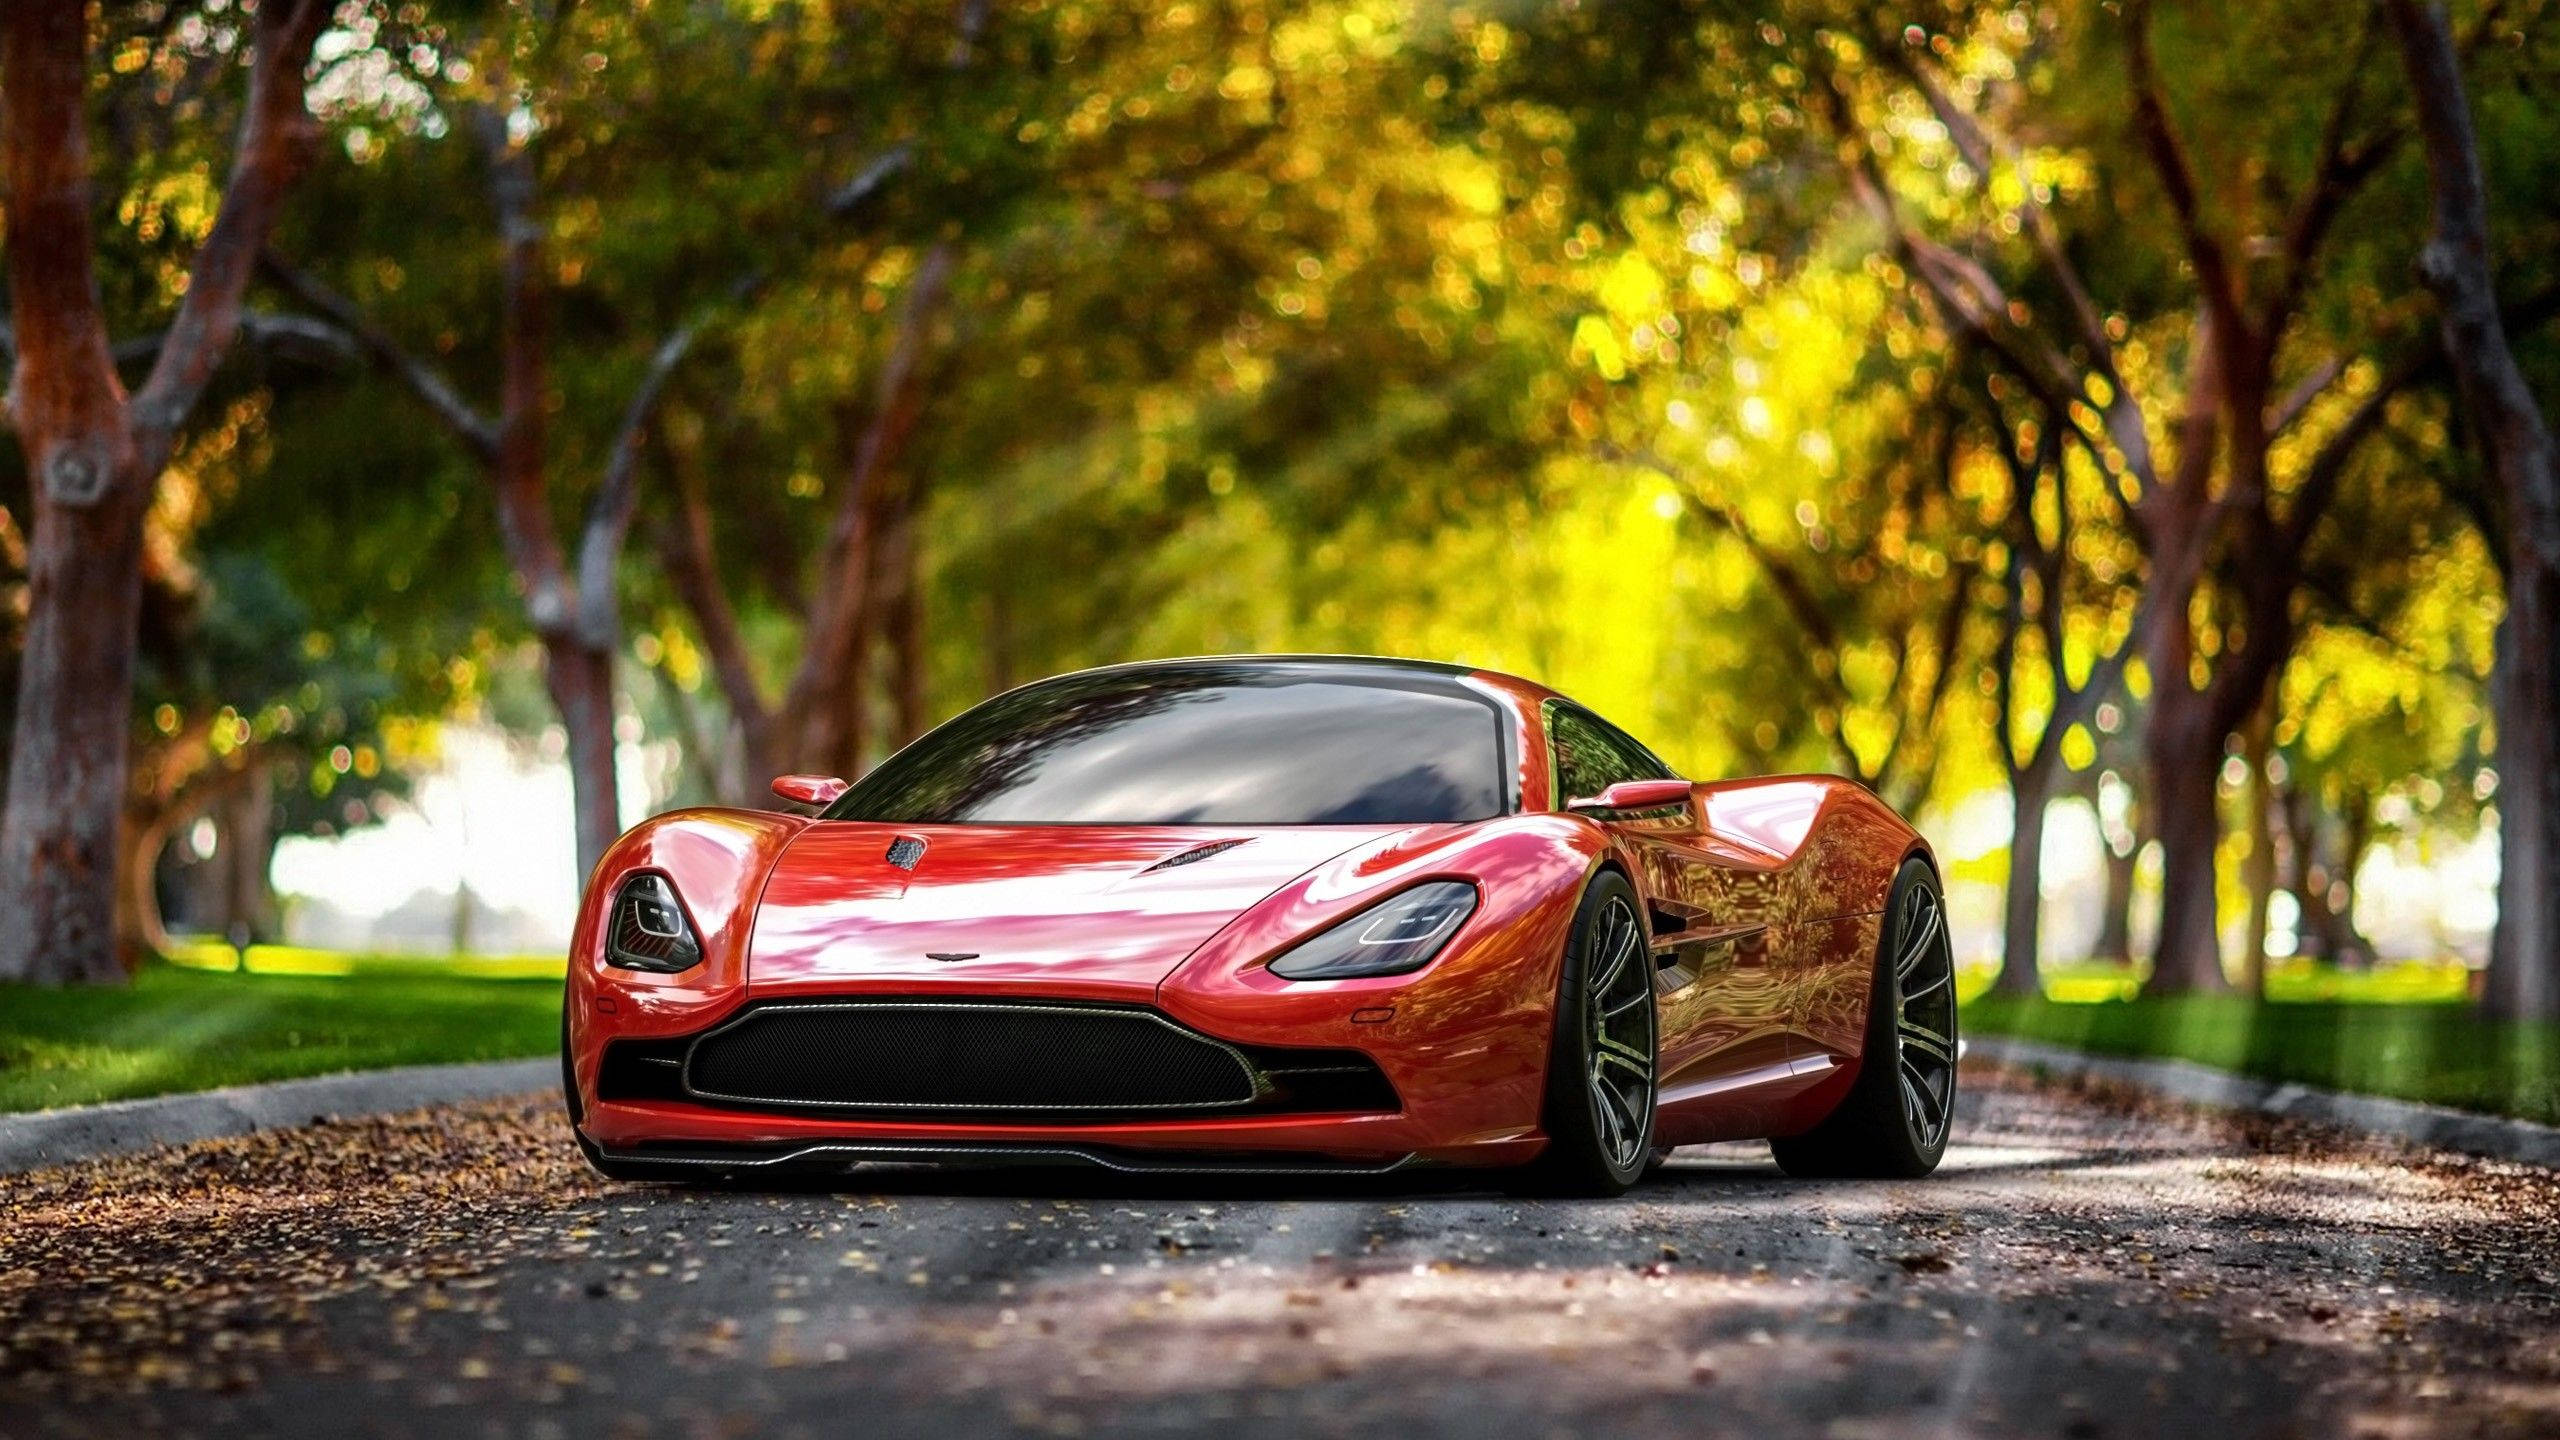 2560x1440 Car Red Aston Martin Dbc Wallpaper